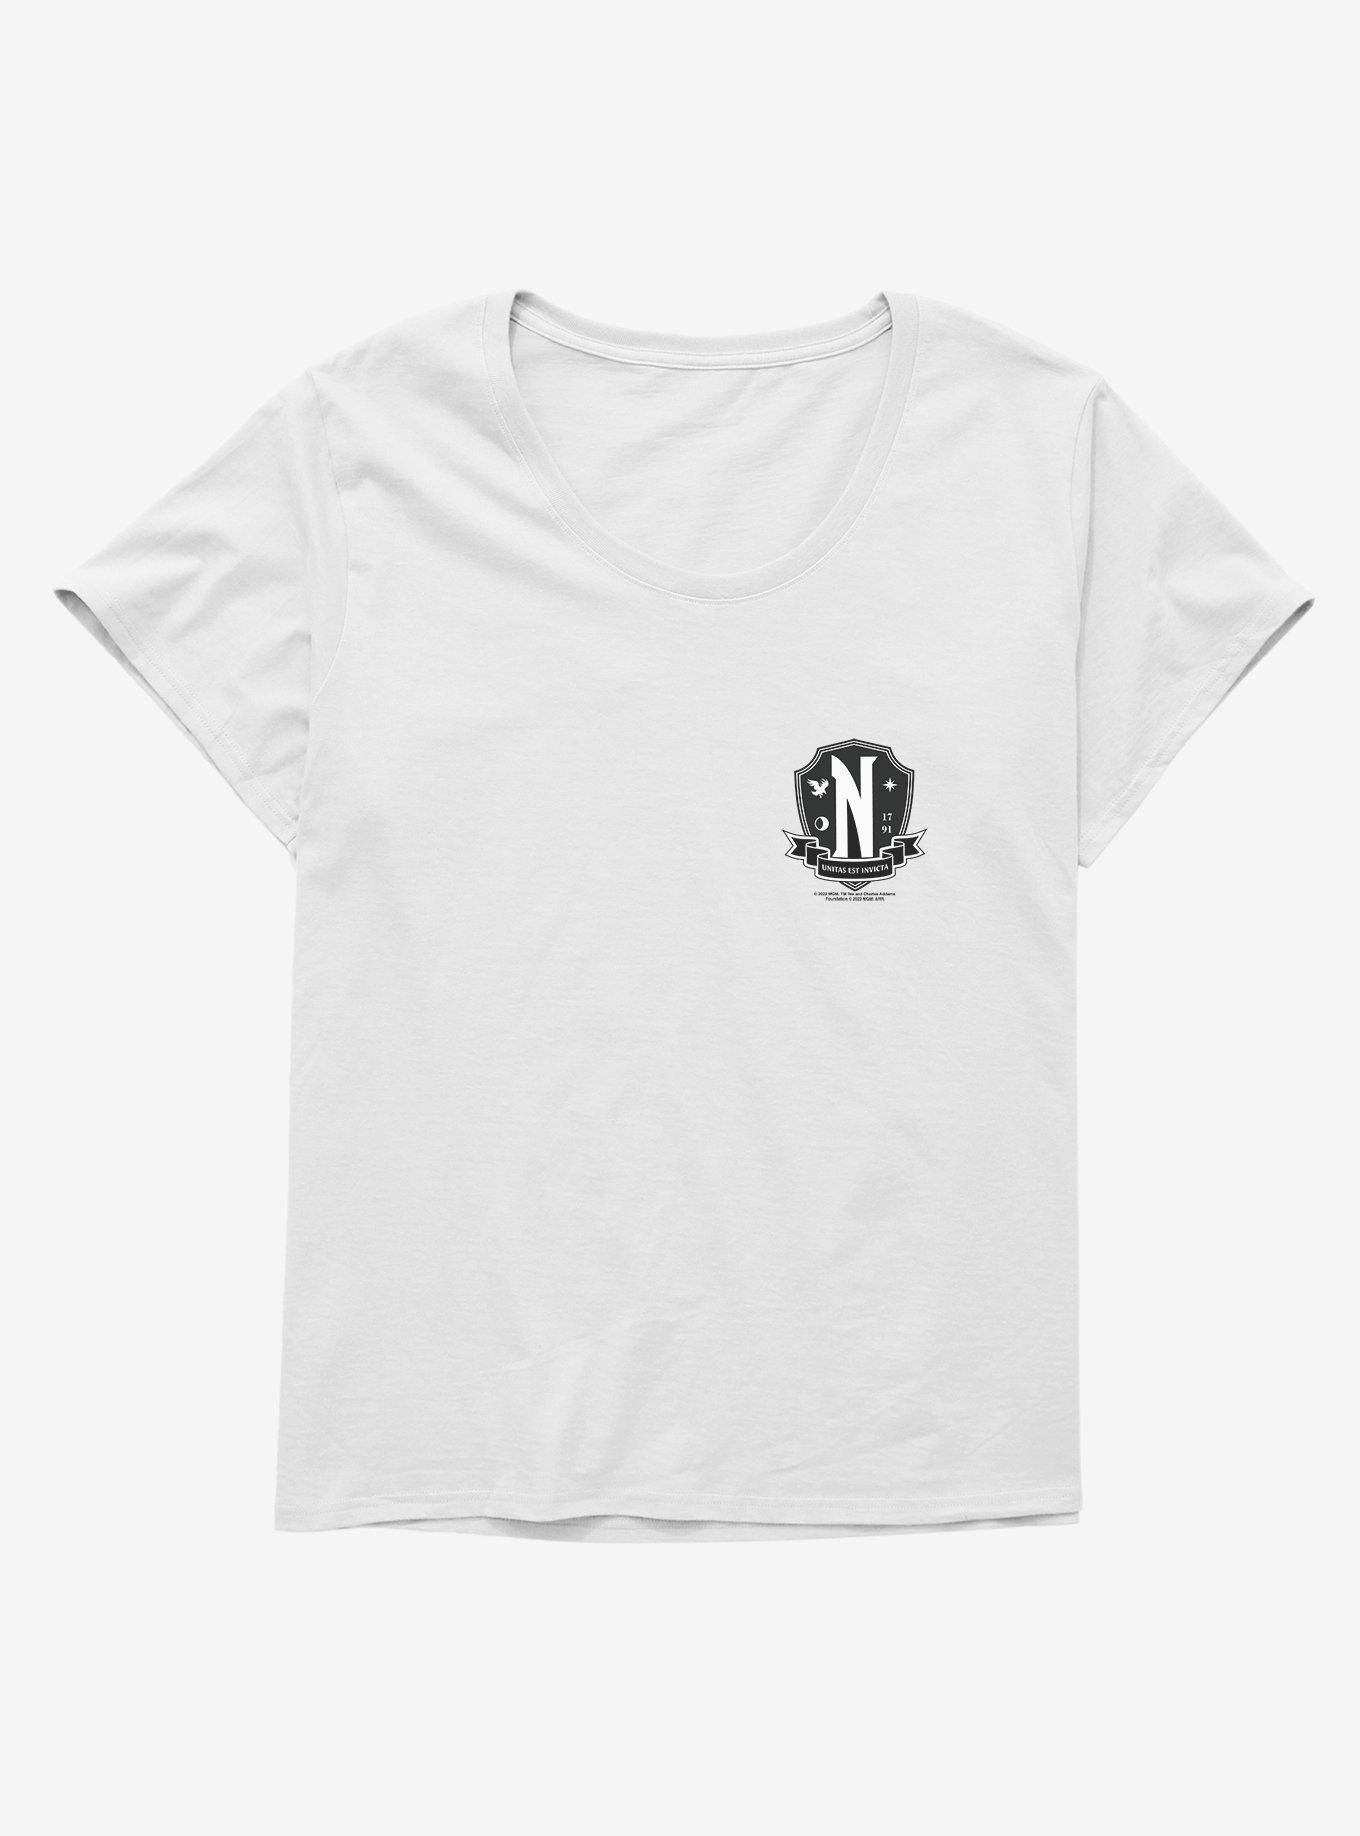 Wednesday Nevermore Academy Crest Girls T-Shirt Plus